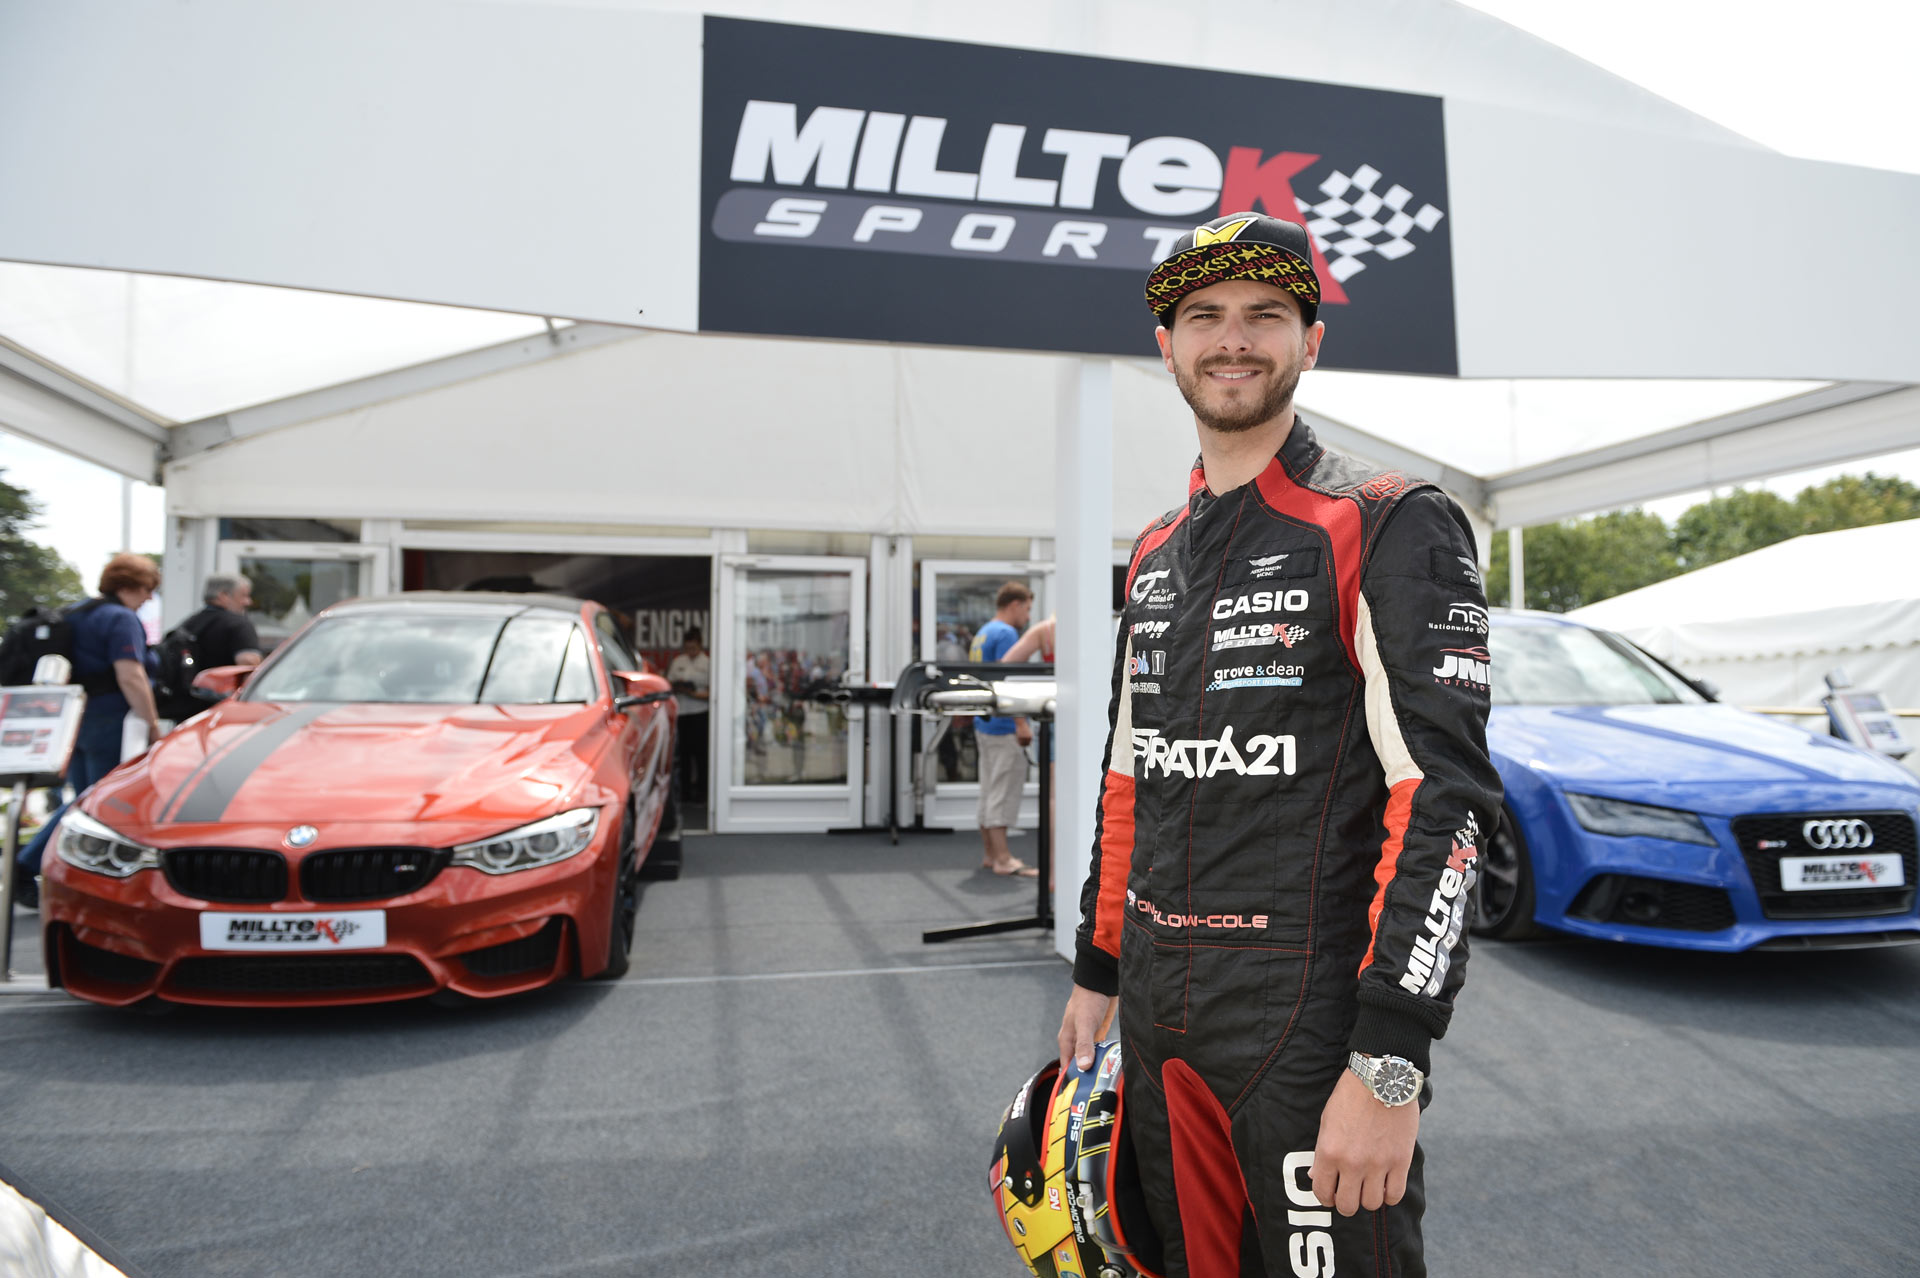 Tom on the Milltek Sport stand at Goodwood Festival of Speed 2015